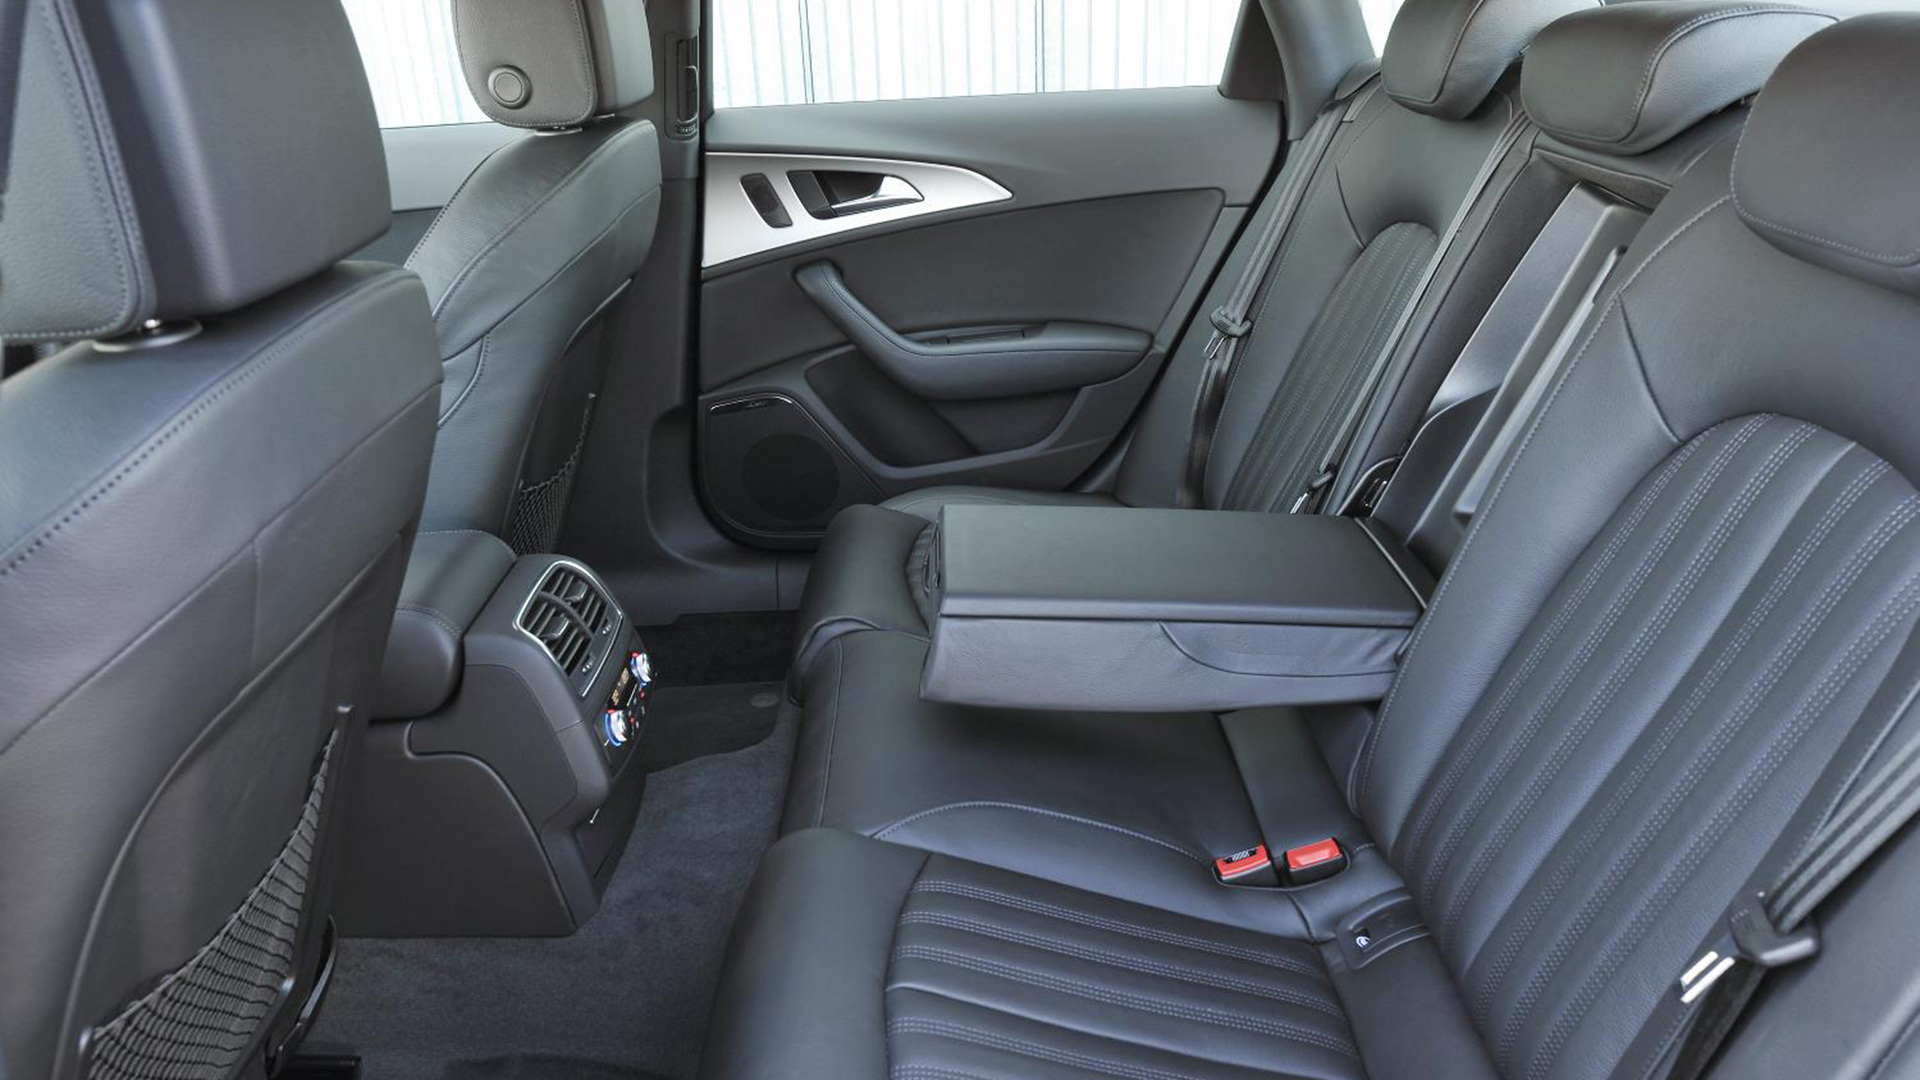 Audi-a6-2013-35 Interior